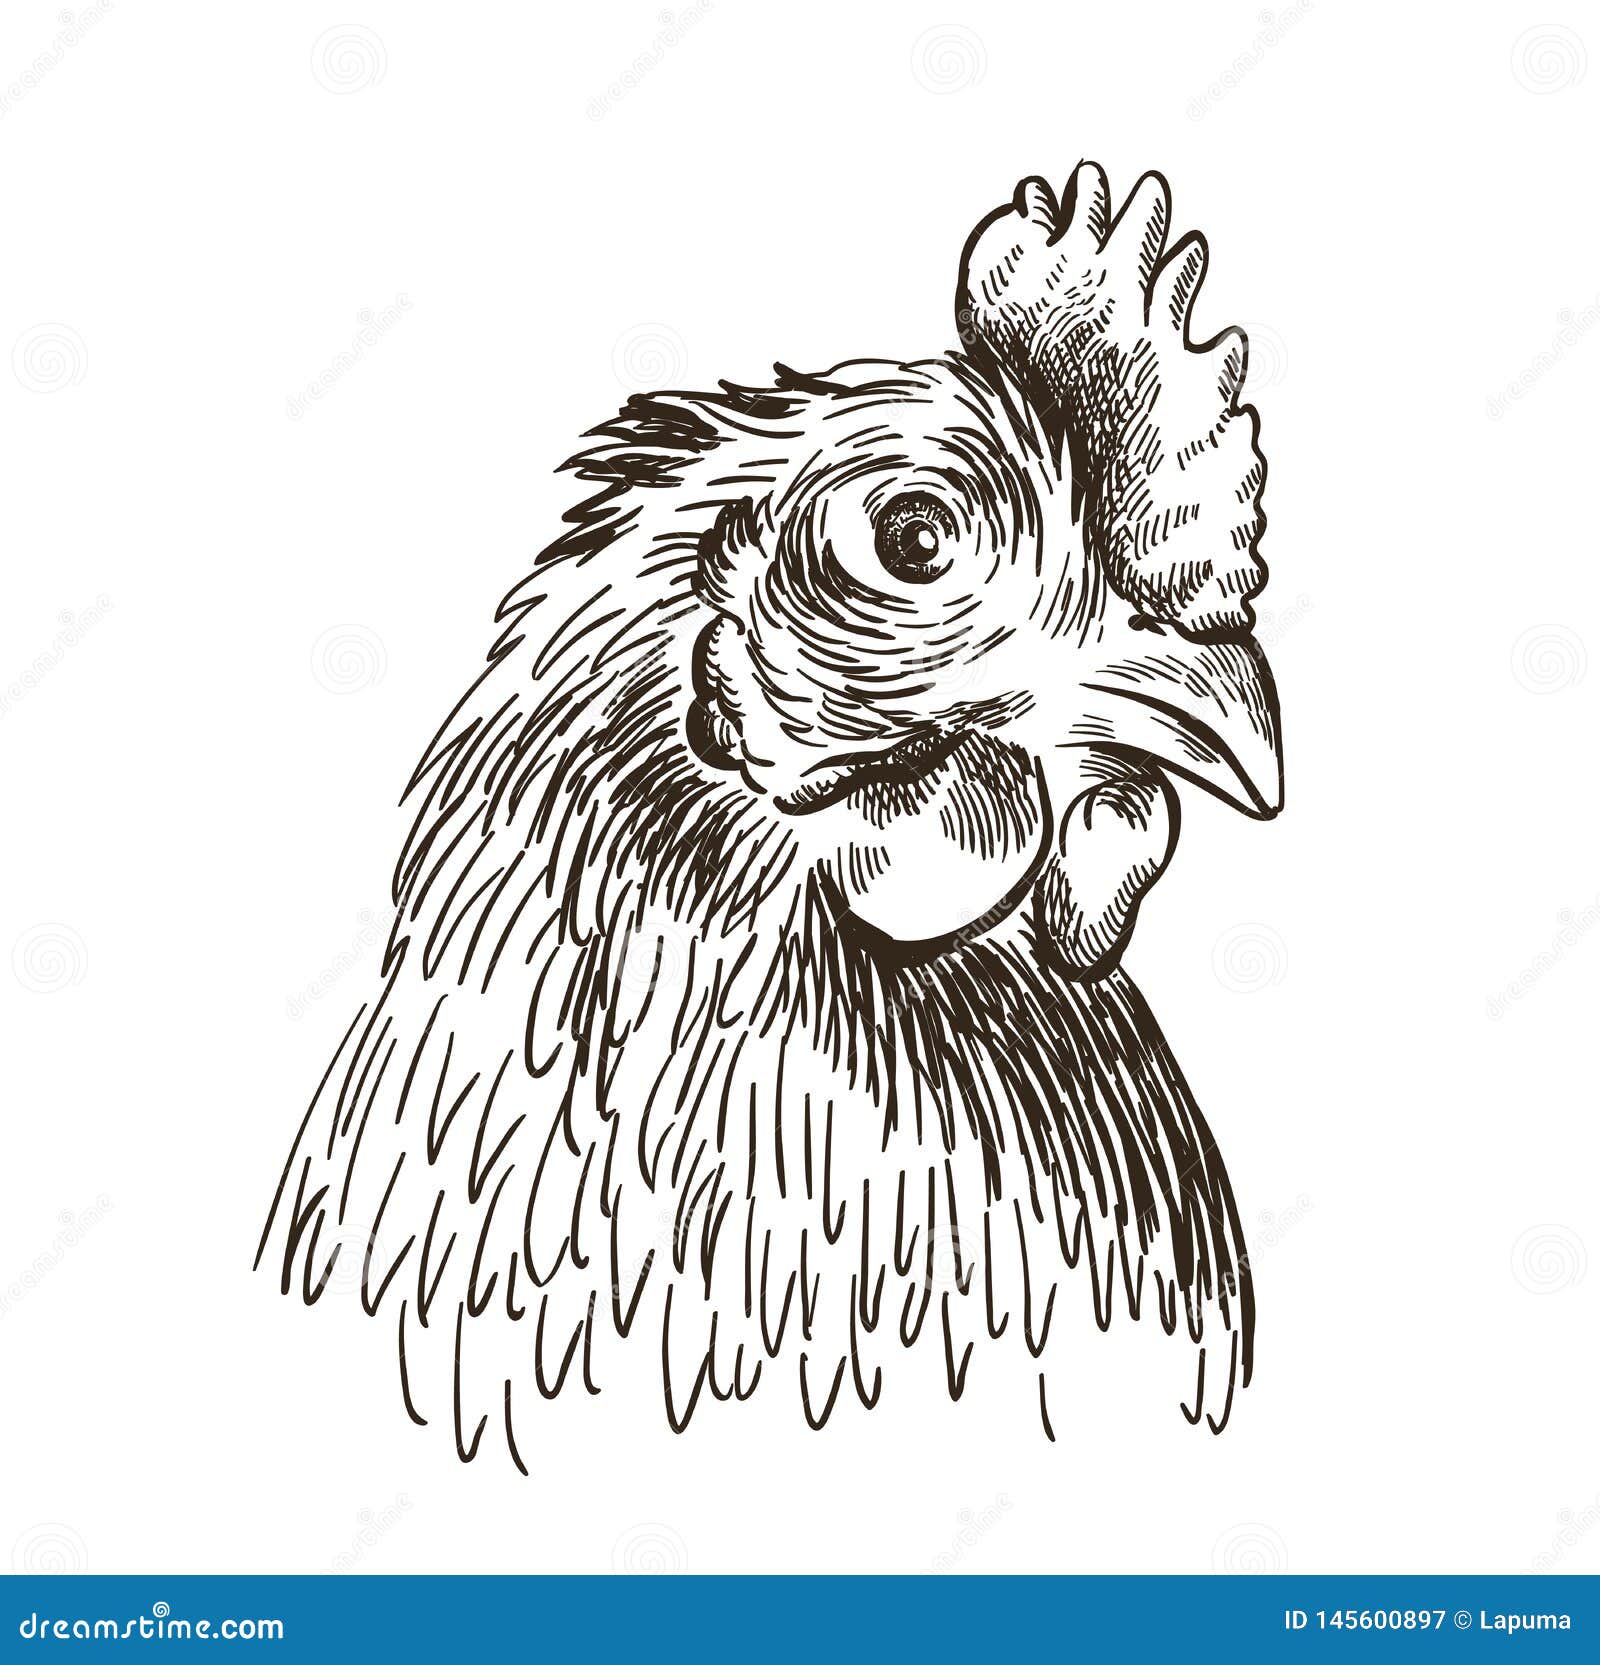 Delicious fried chicken sketch hand drawn vector Illustration #253882796